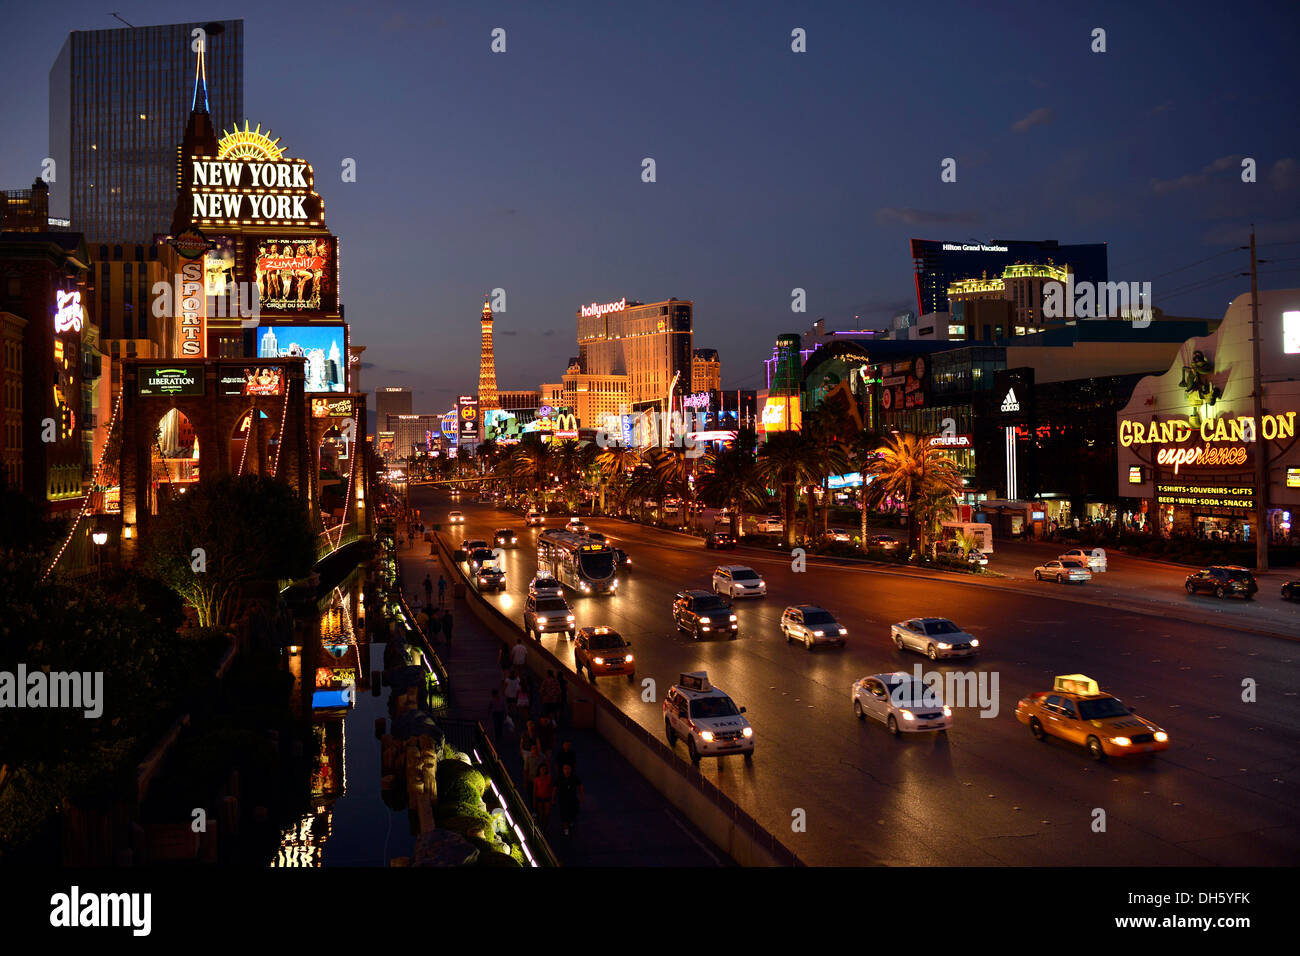 Night scene, The Strip, Planet Hollywood, luxury hotel, The Cosmopolitan, Paris, Treature Island, New York New York, Las Vegas Stock Photo